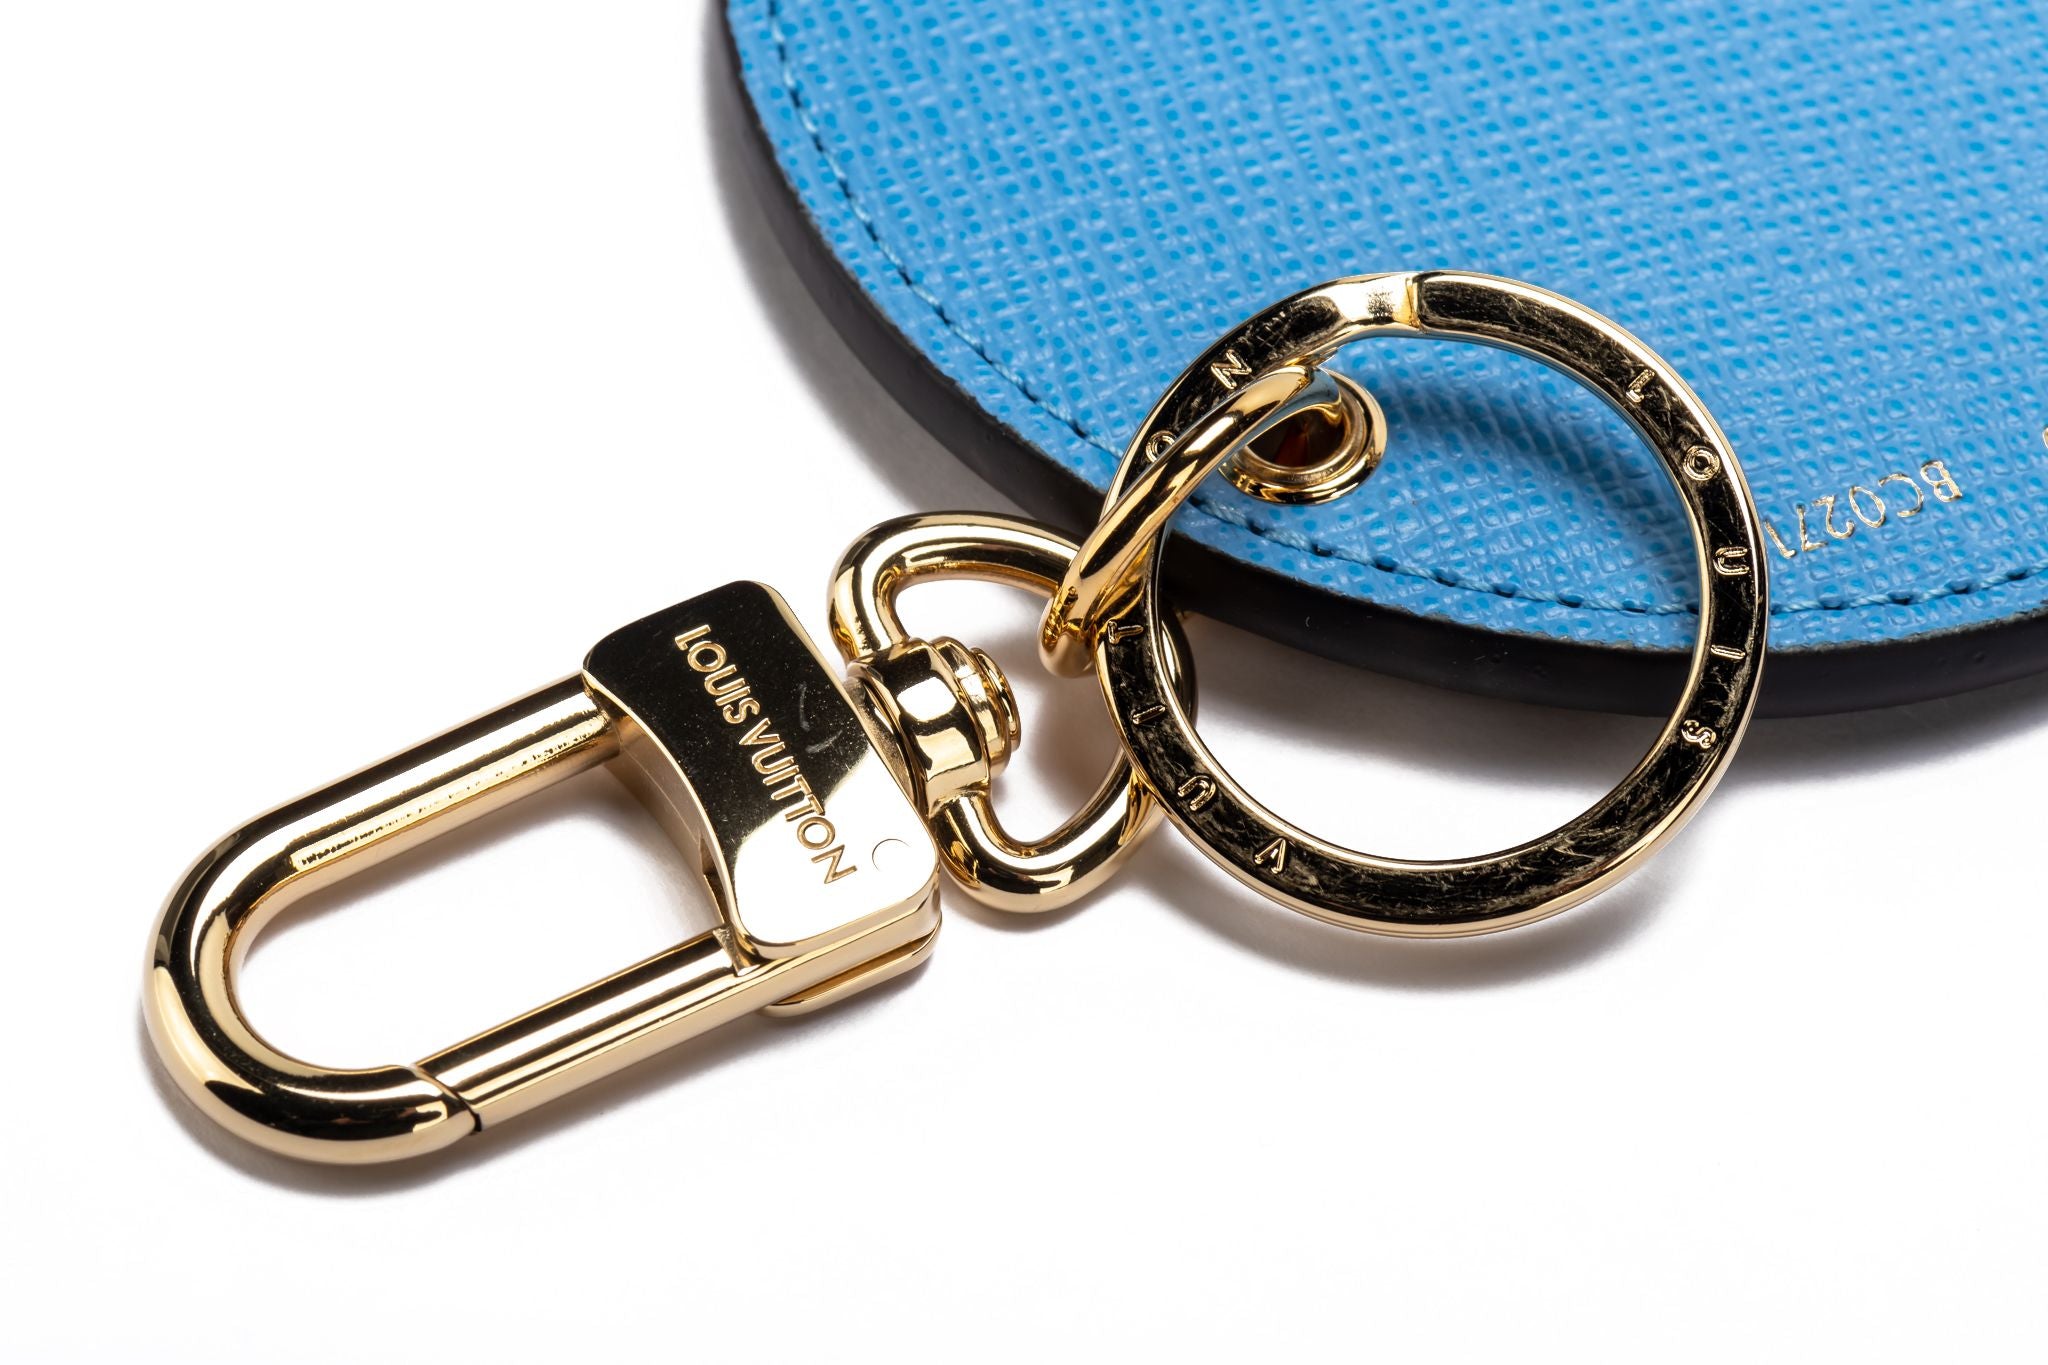 Louis Vuitton lv Keychain bag charm key holder